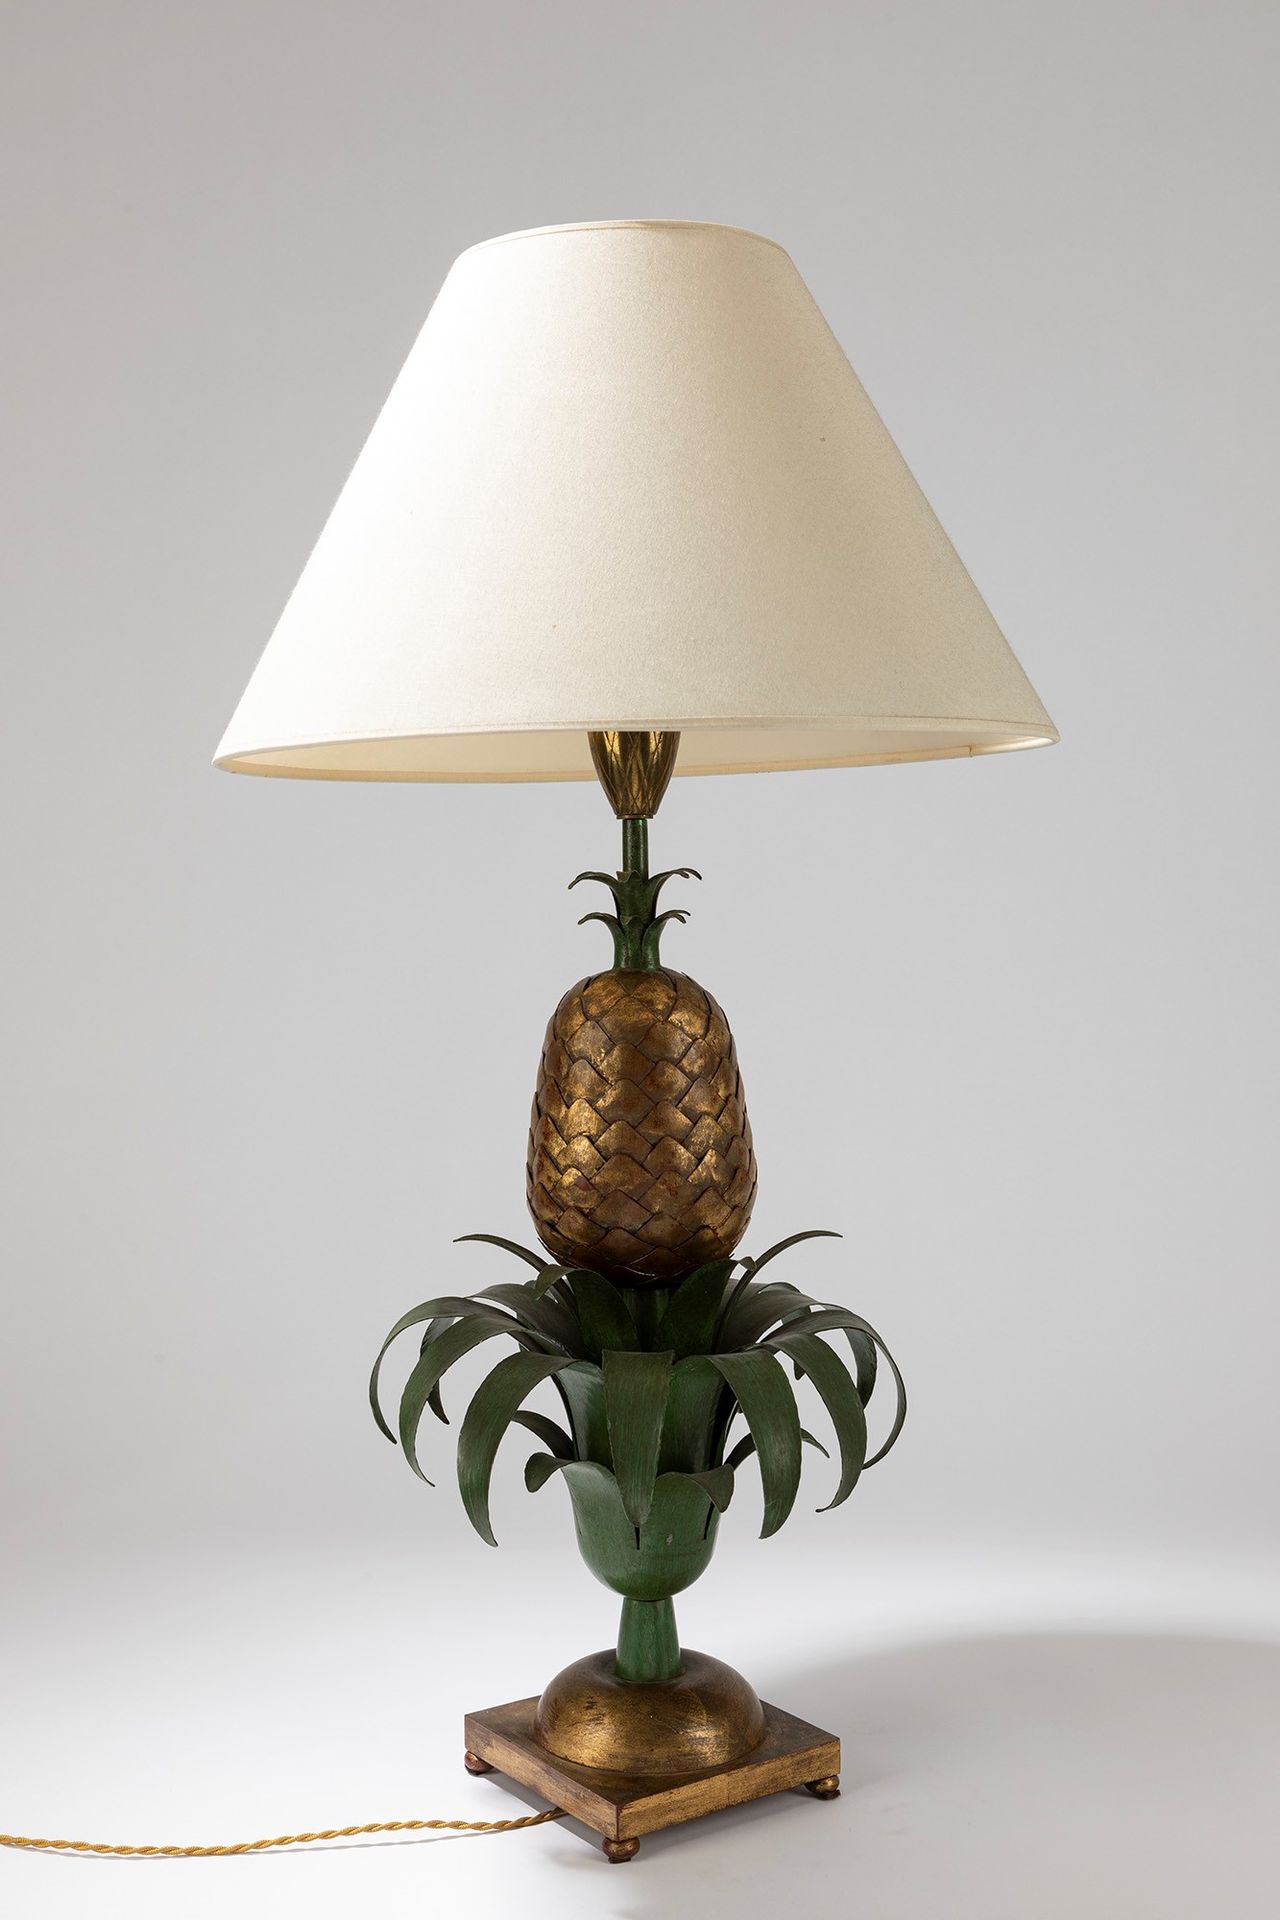 FRENCH MANUFACTURE 台灯，1960年左右

cm h 82 x dm 45
菠萝状的绿色黄铜和舔金属。